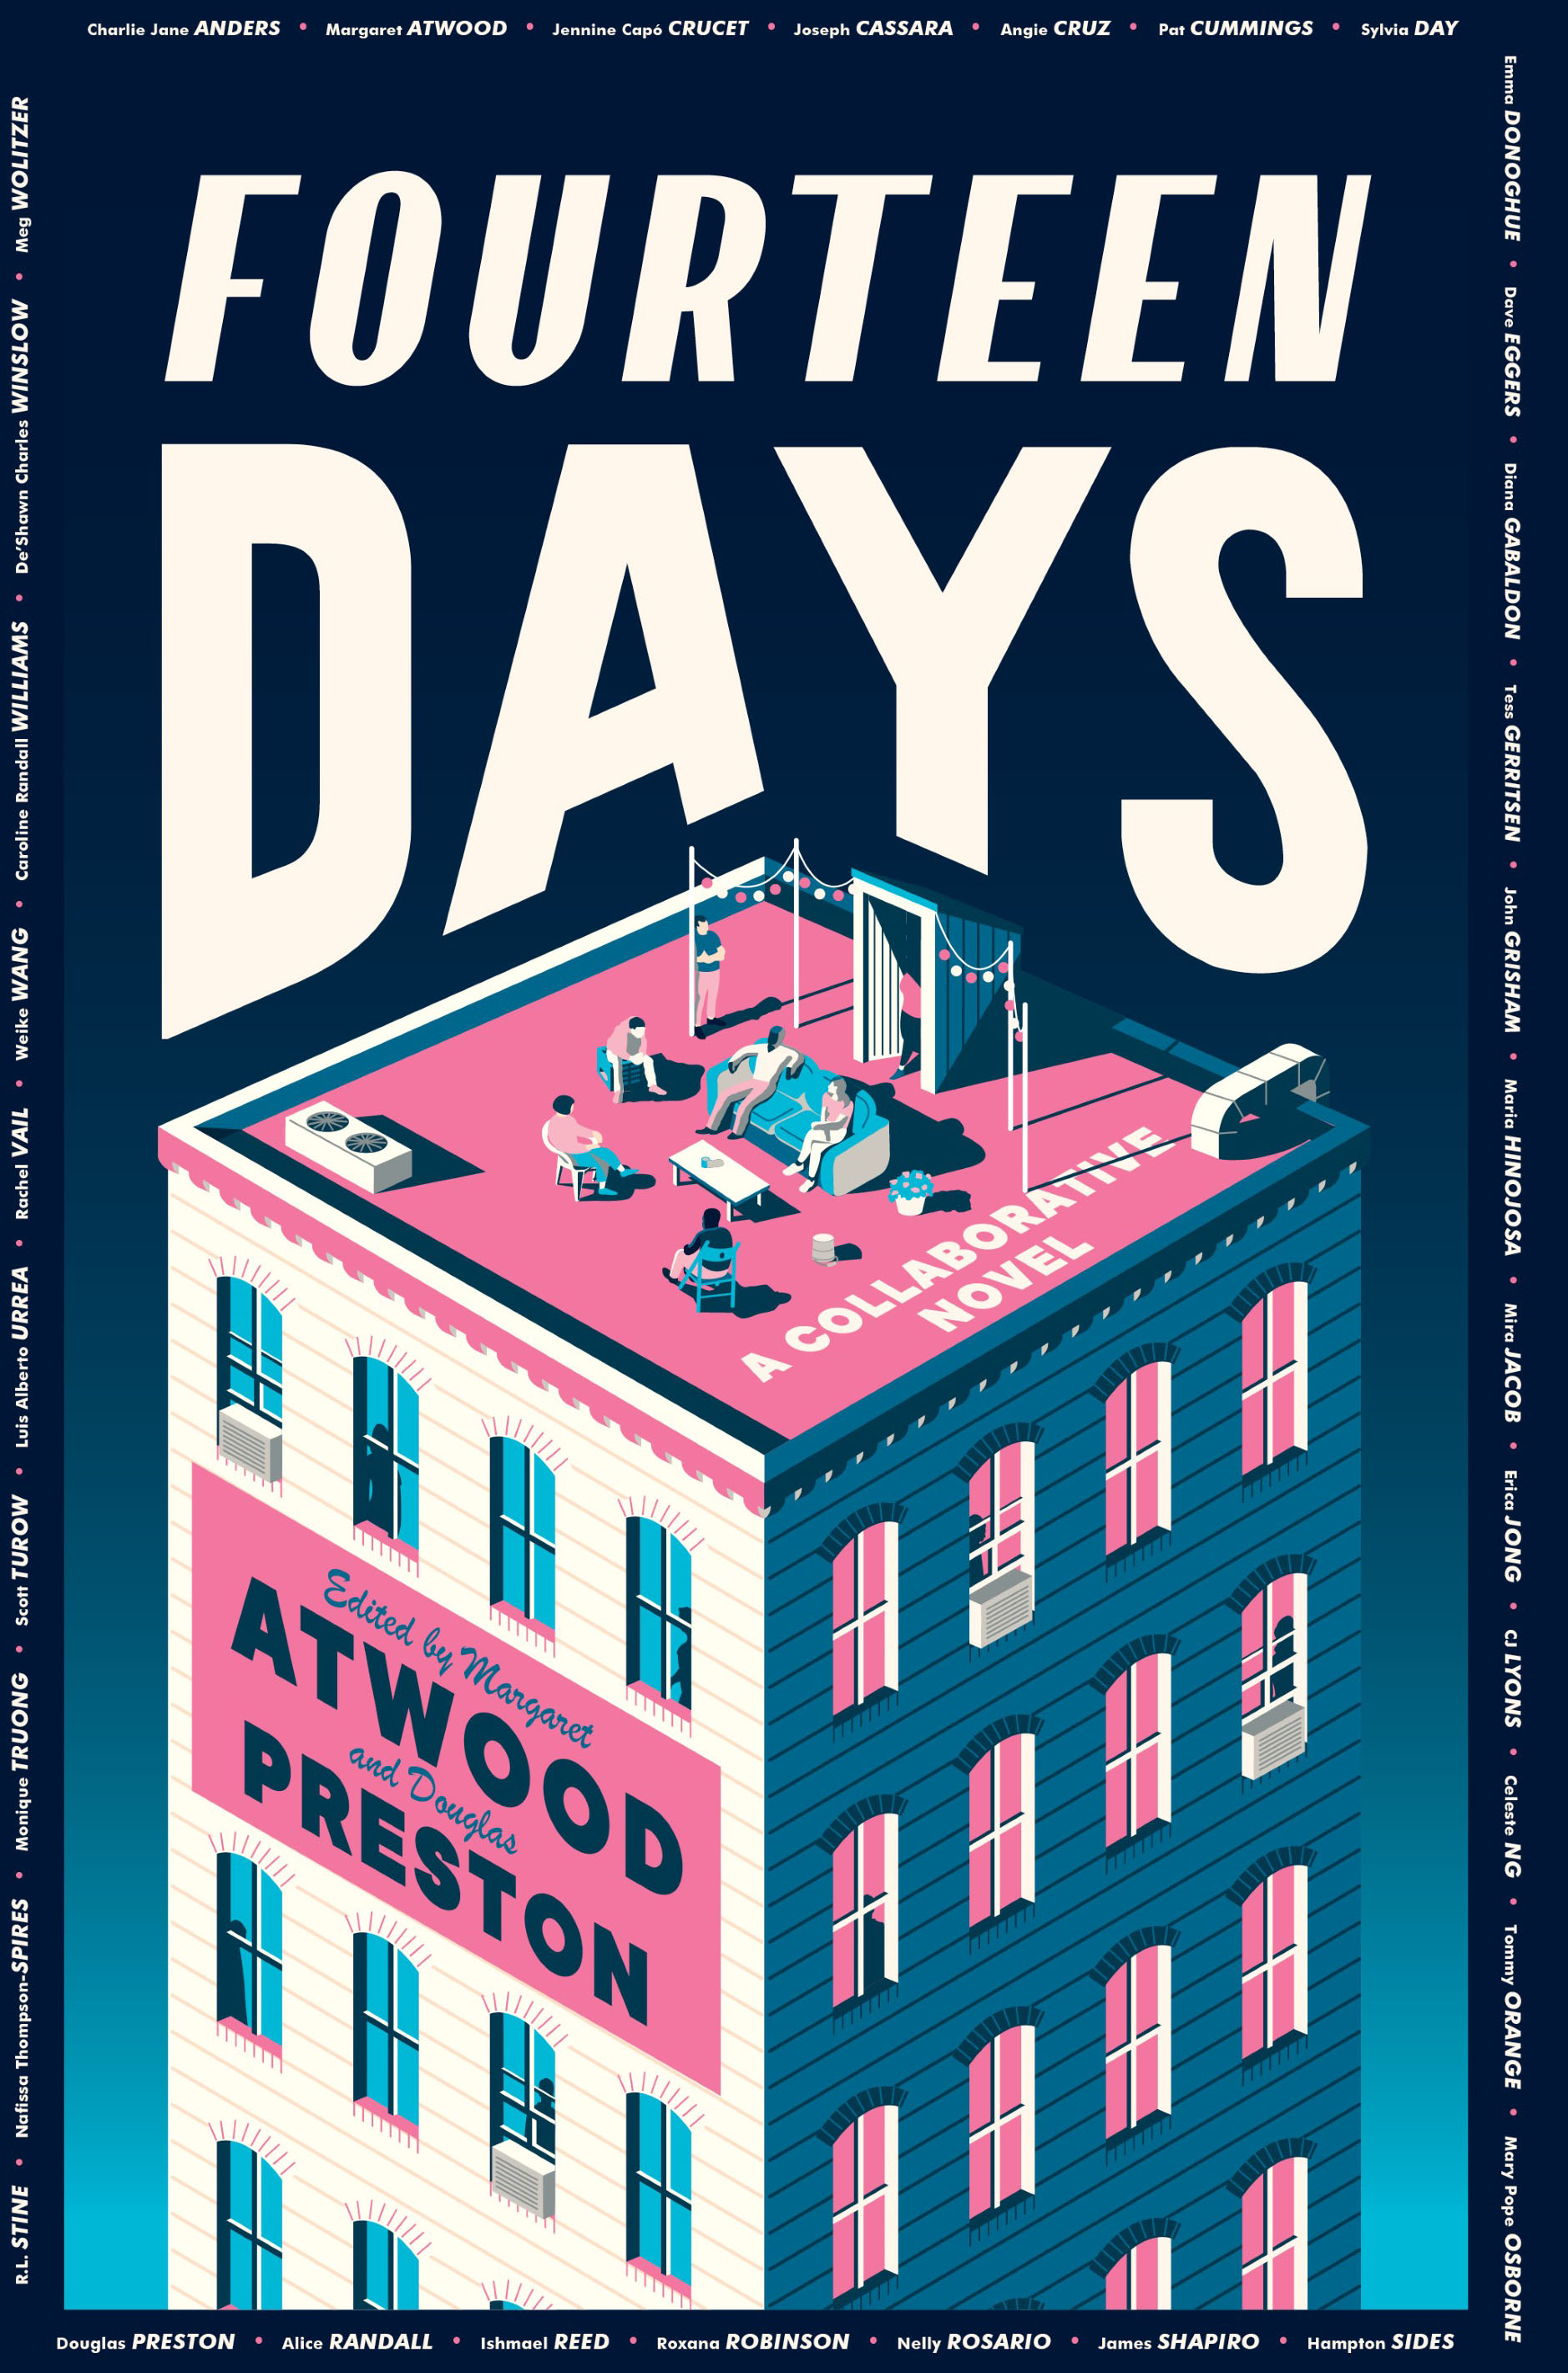 Fourteen Days cover